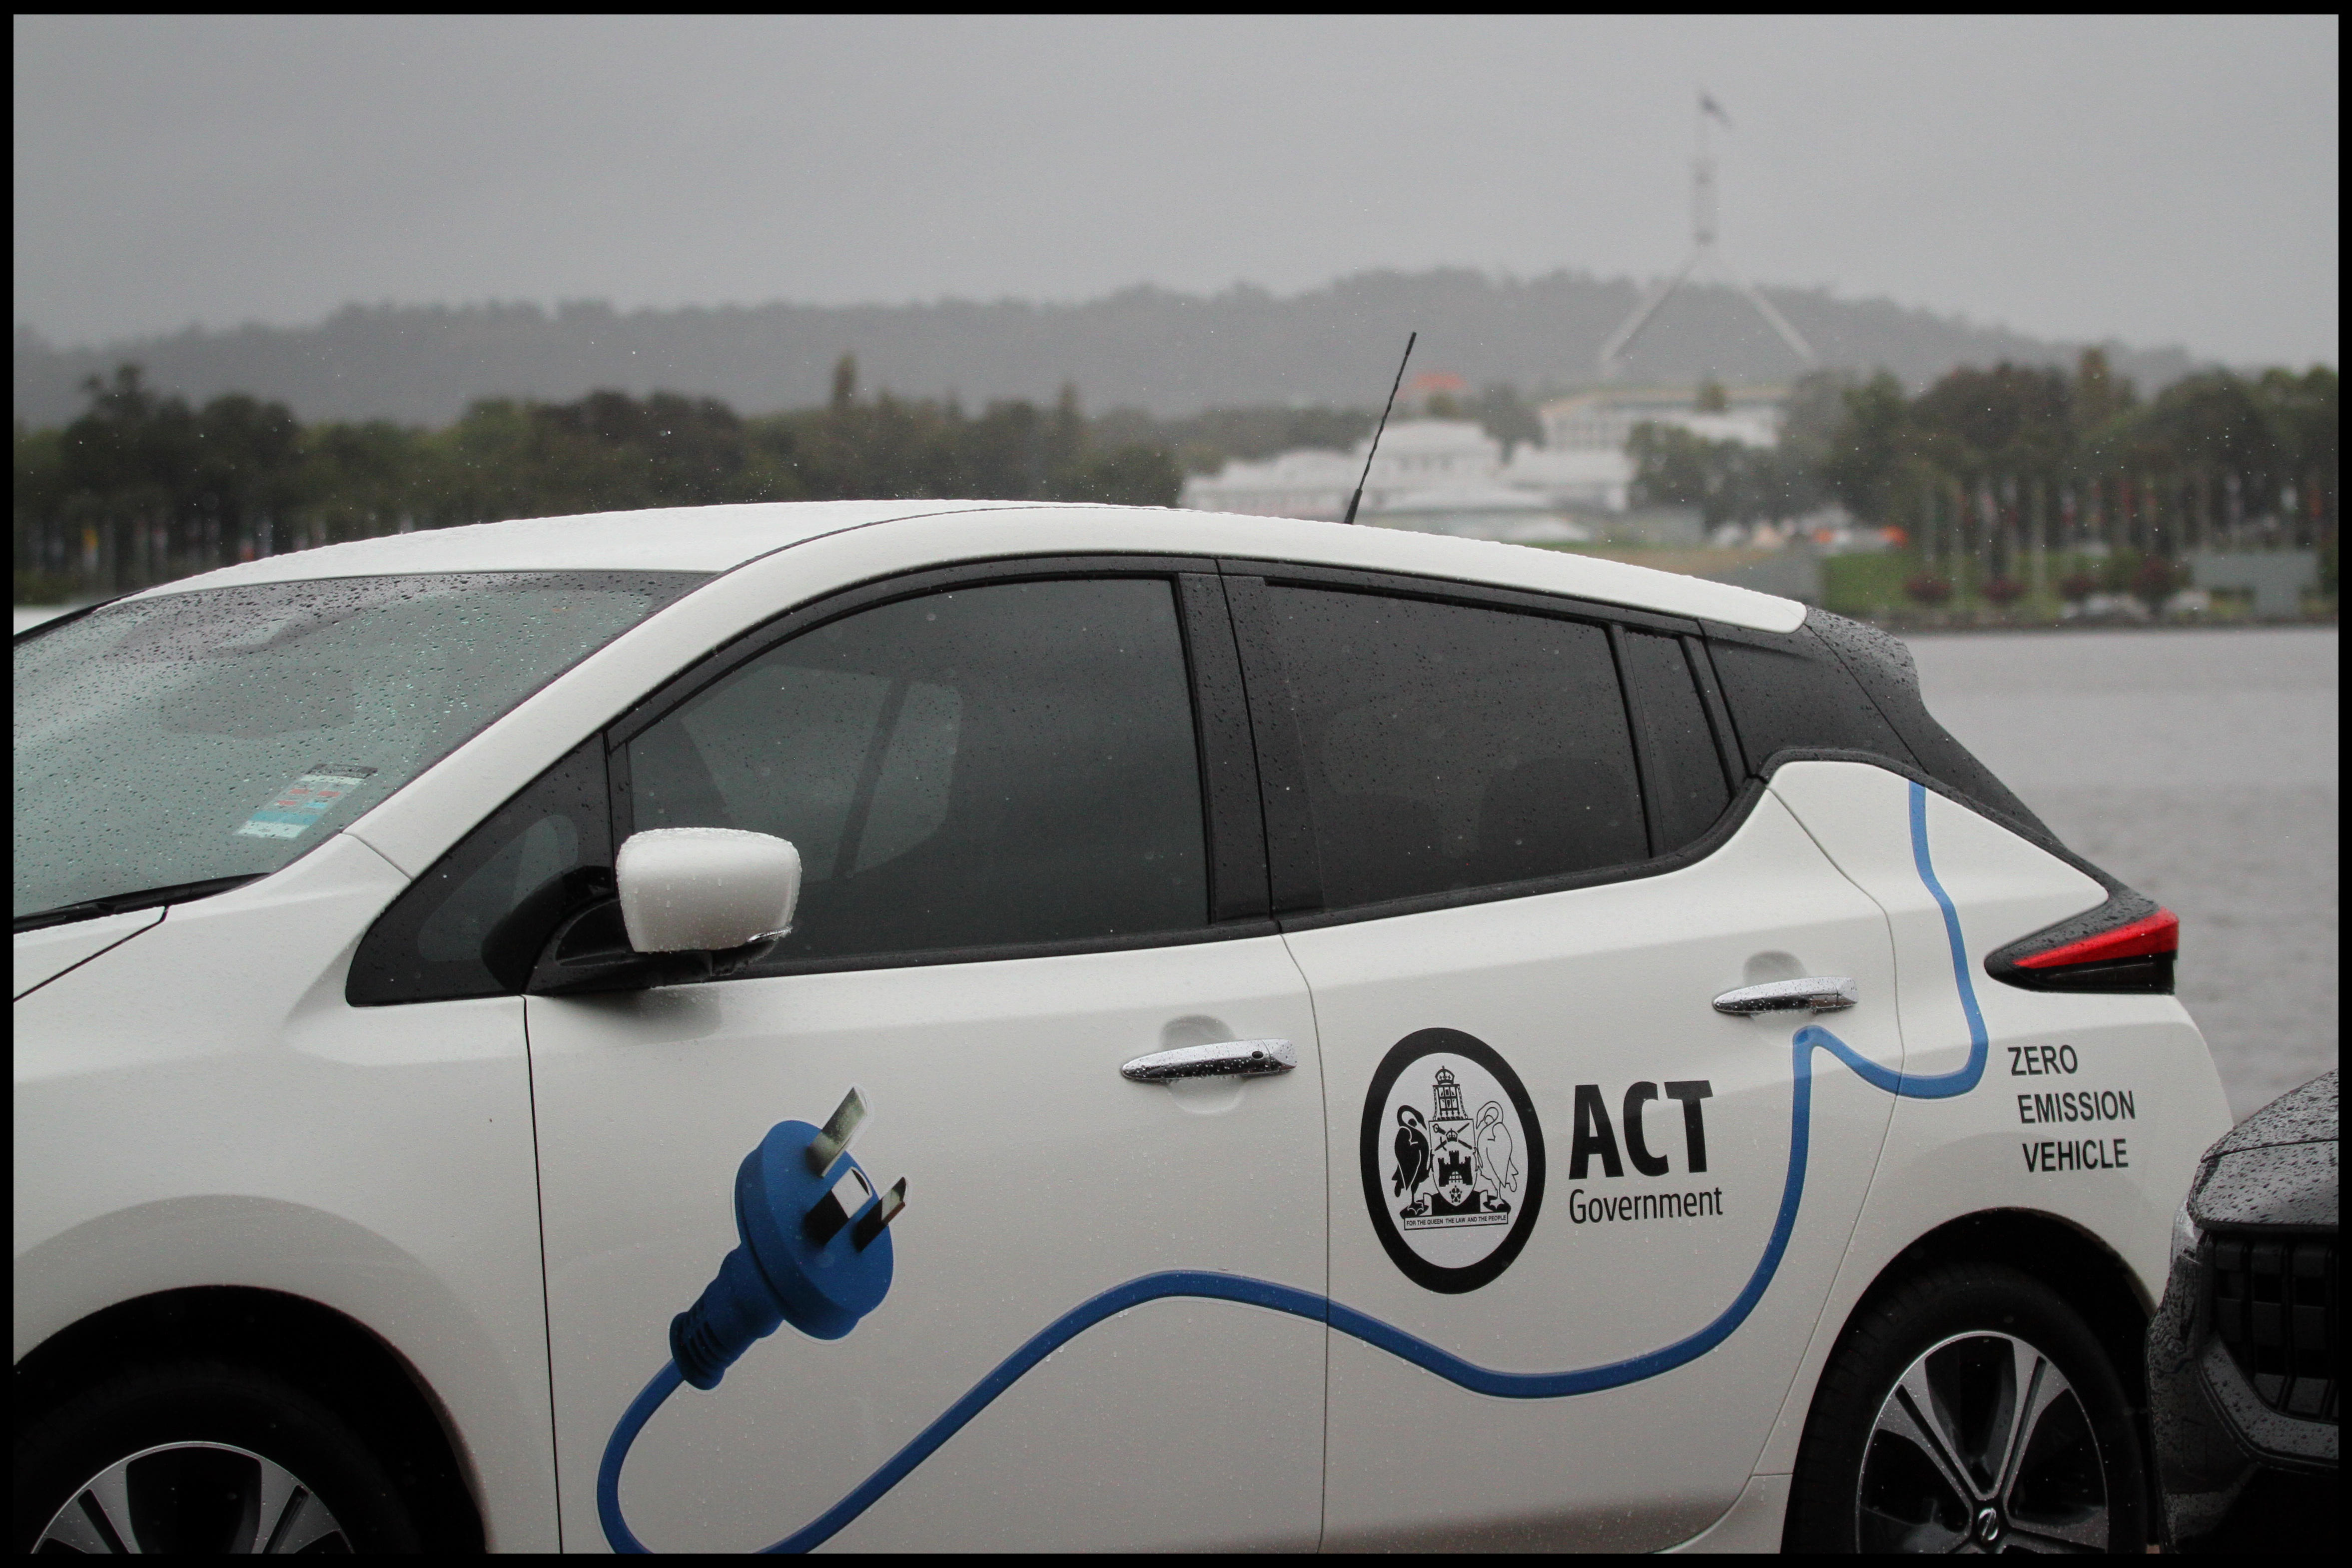 ACT Governments zero emmission vehicle